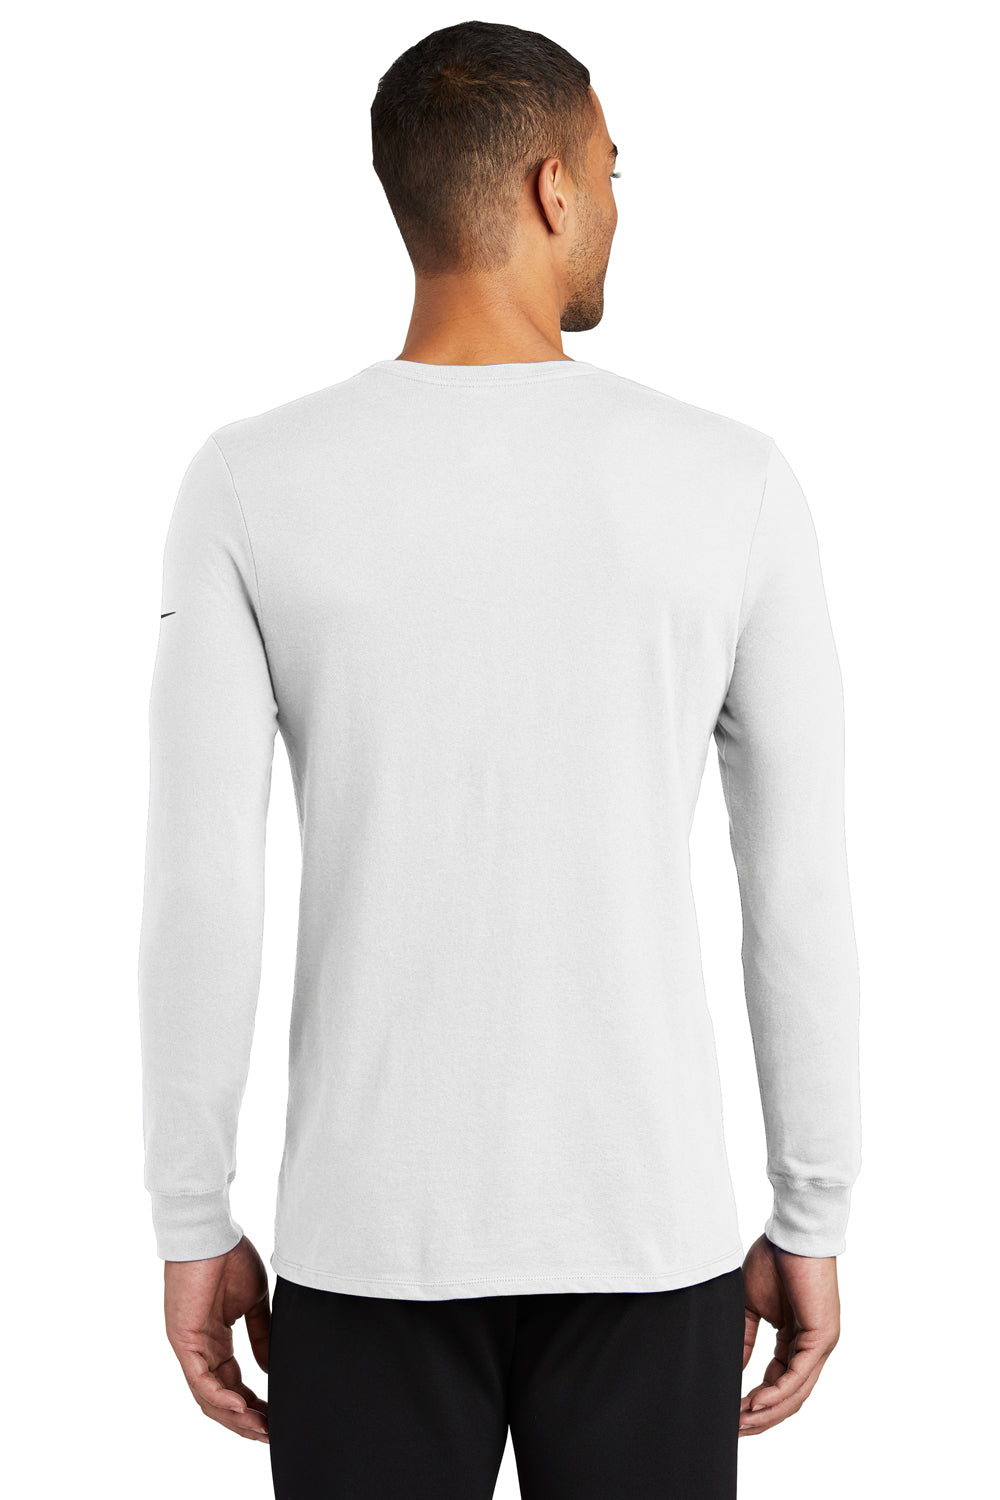 Nike NKBQ5230 Mens Dri-Fit Moisture Wicking Long Sleeve Crewneck T-Shirt White Model Back